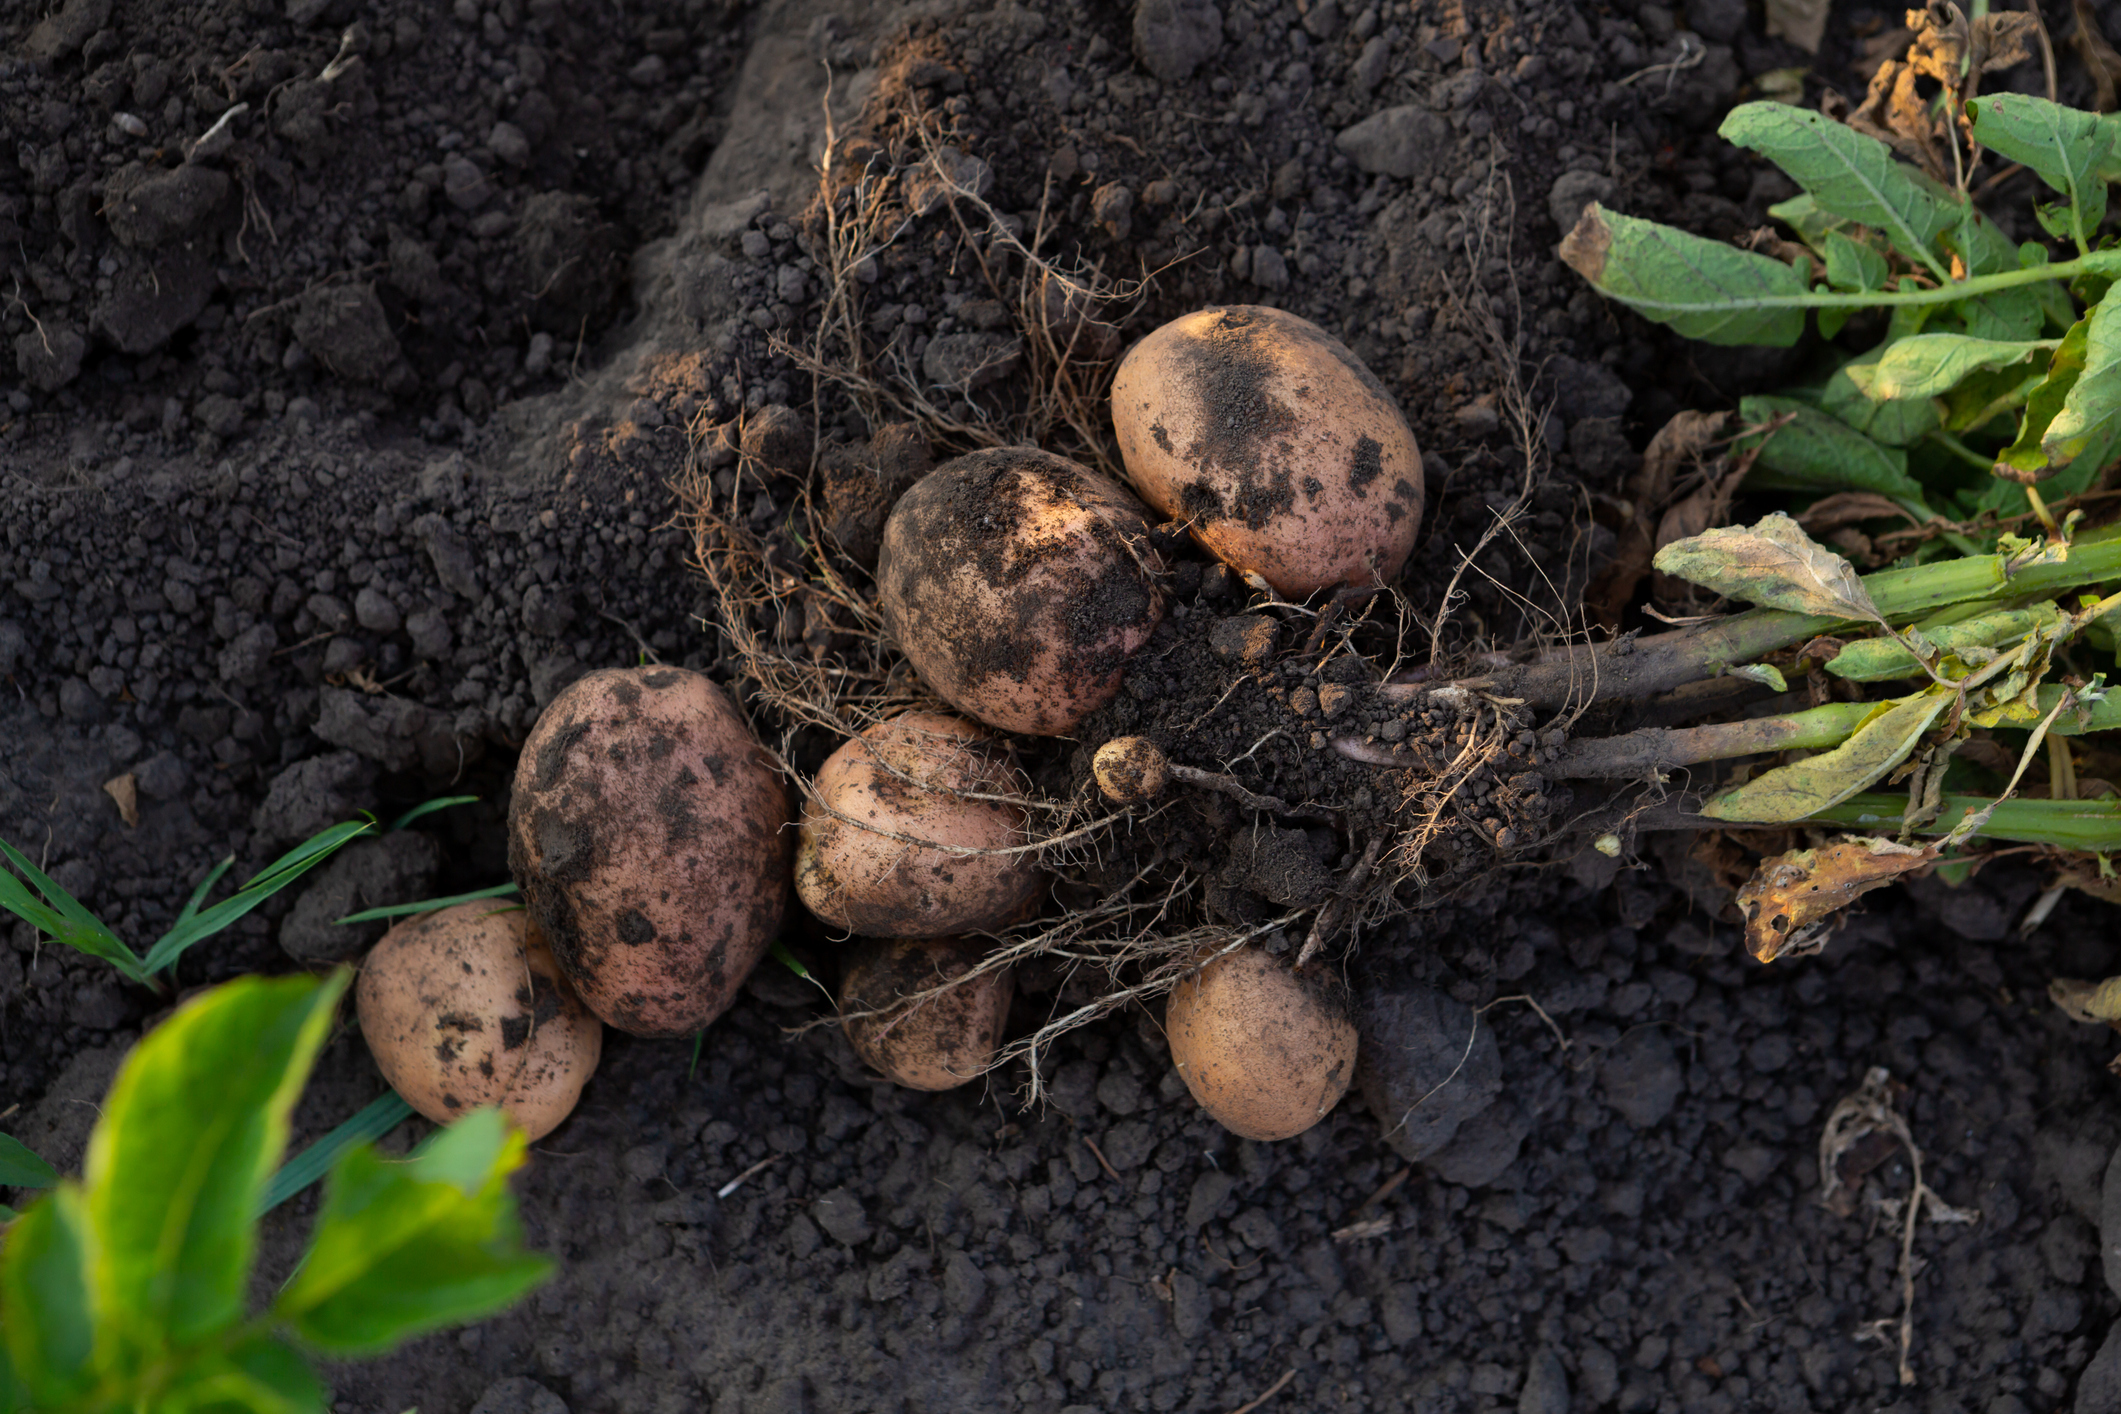 Young potatoes roots in vegetables garden harvesting top view (Photo: iStock - Olha_Afanasieva)